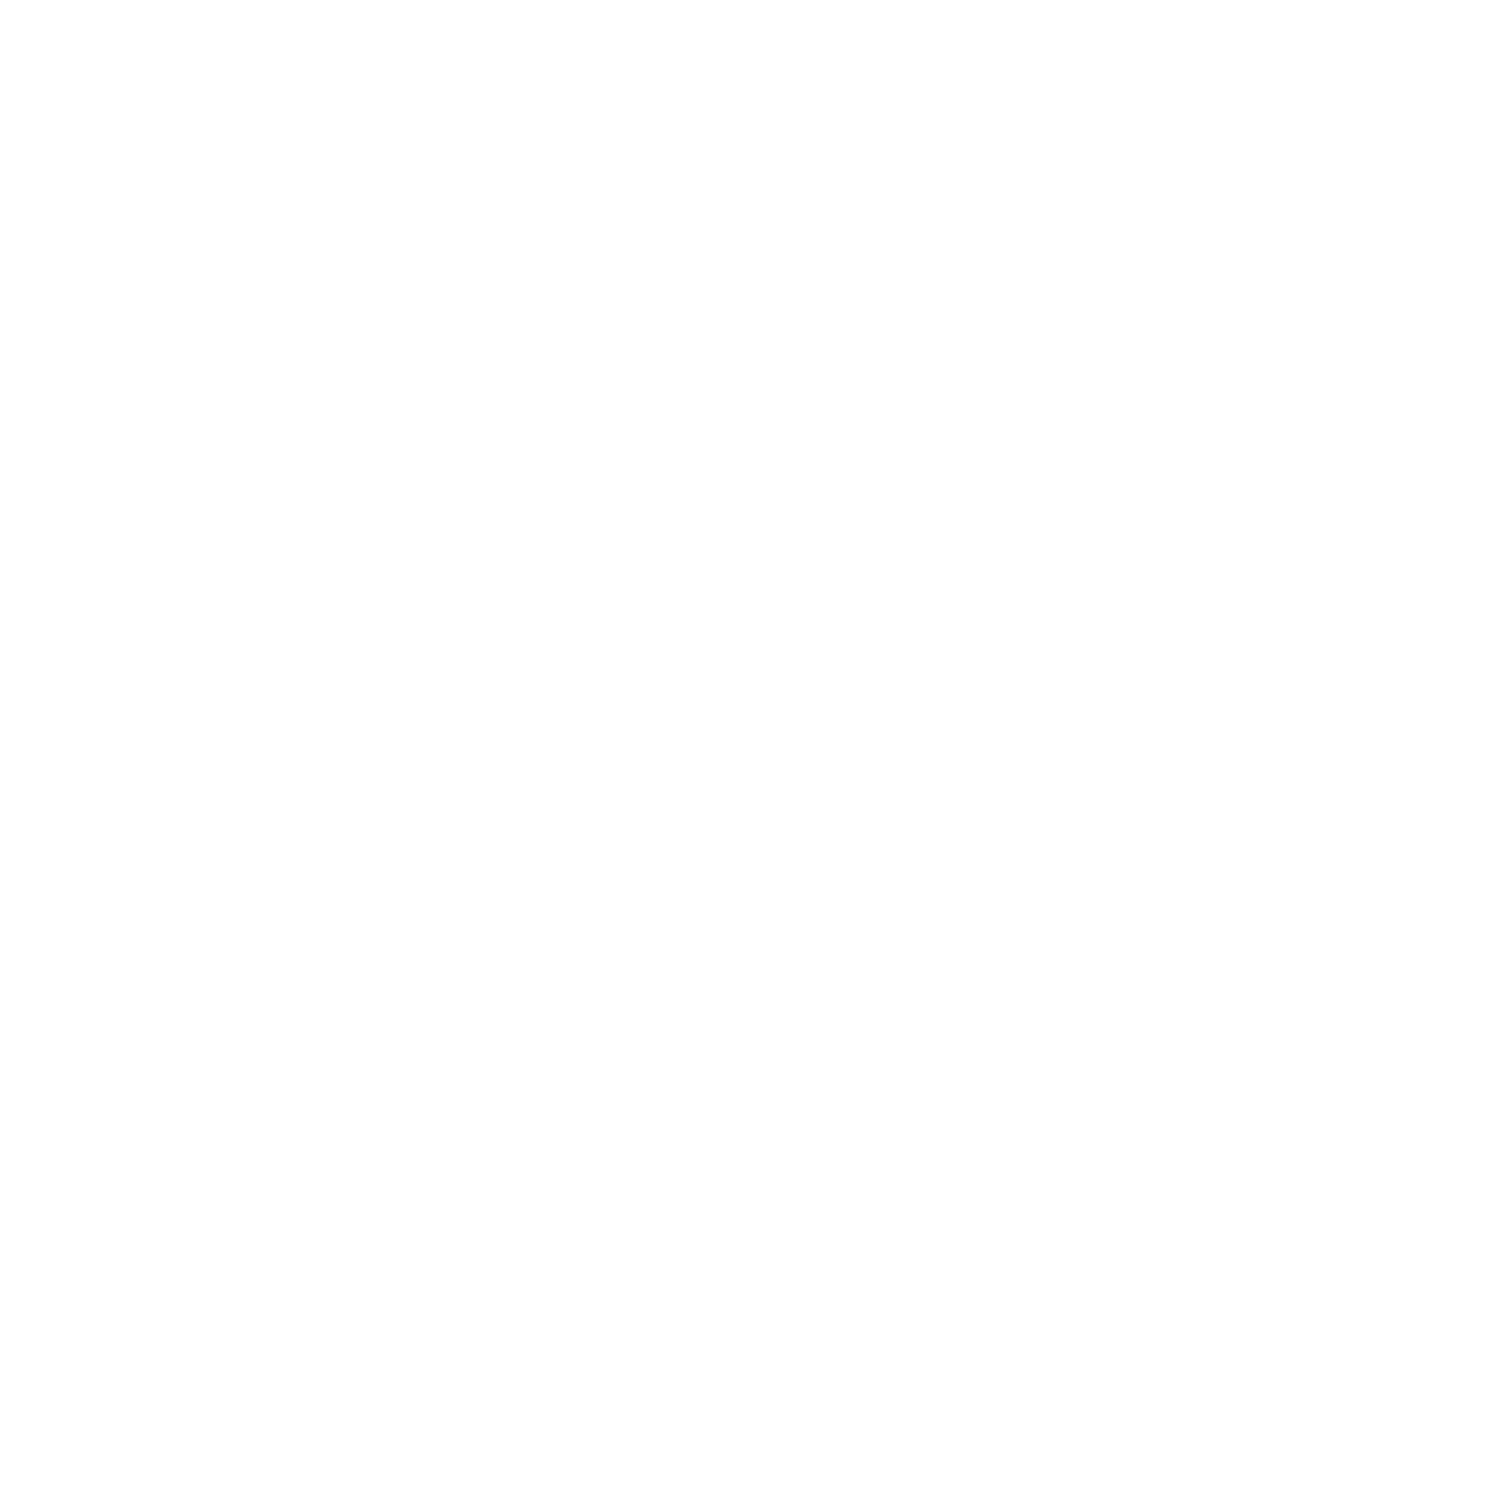 RVMP logo with wheel